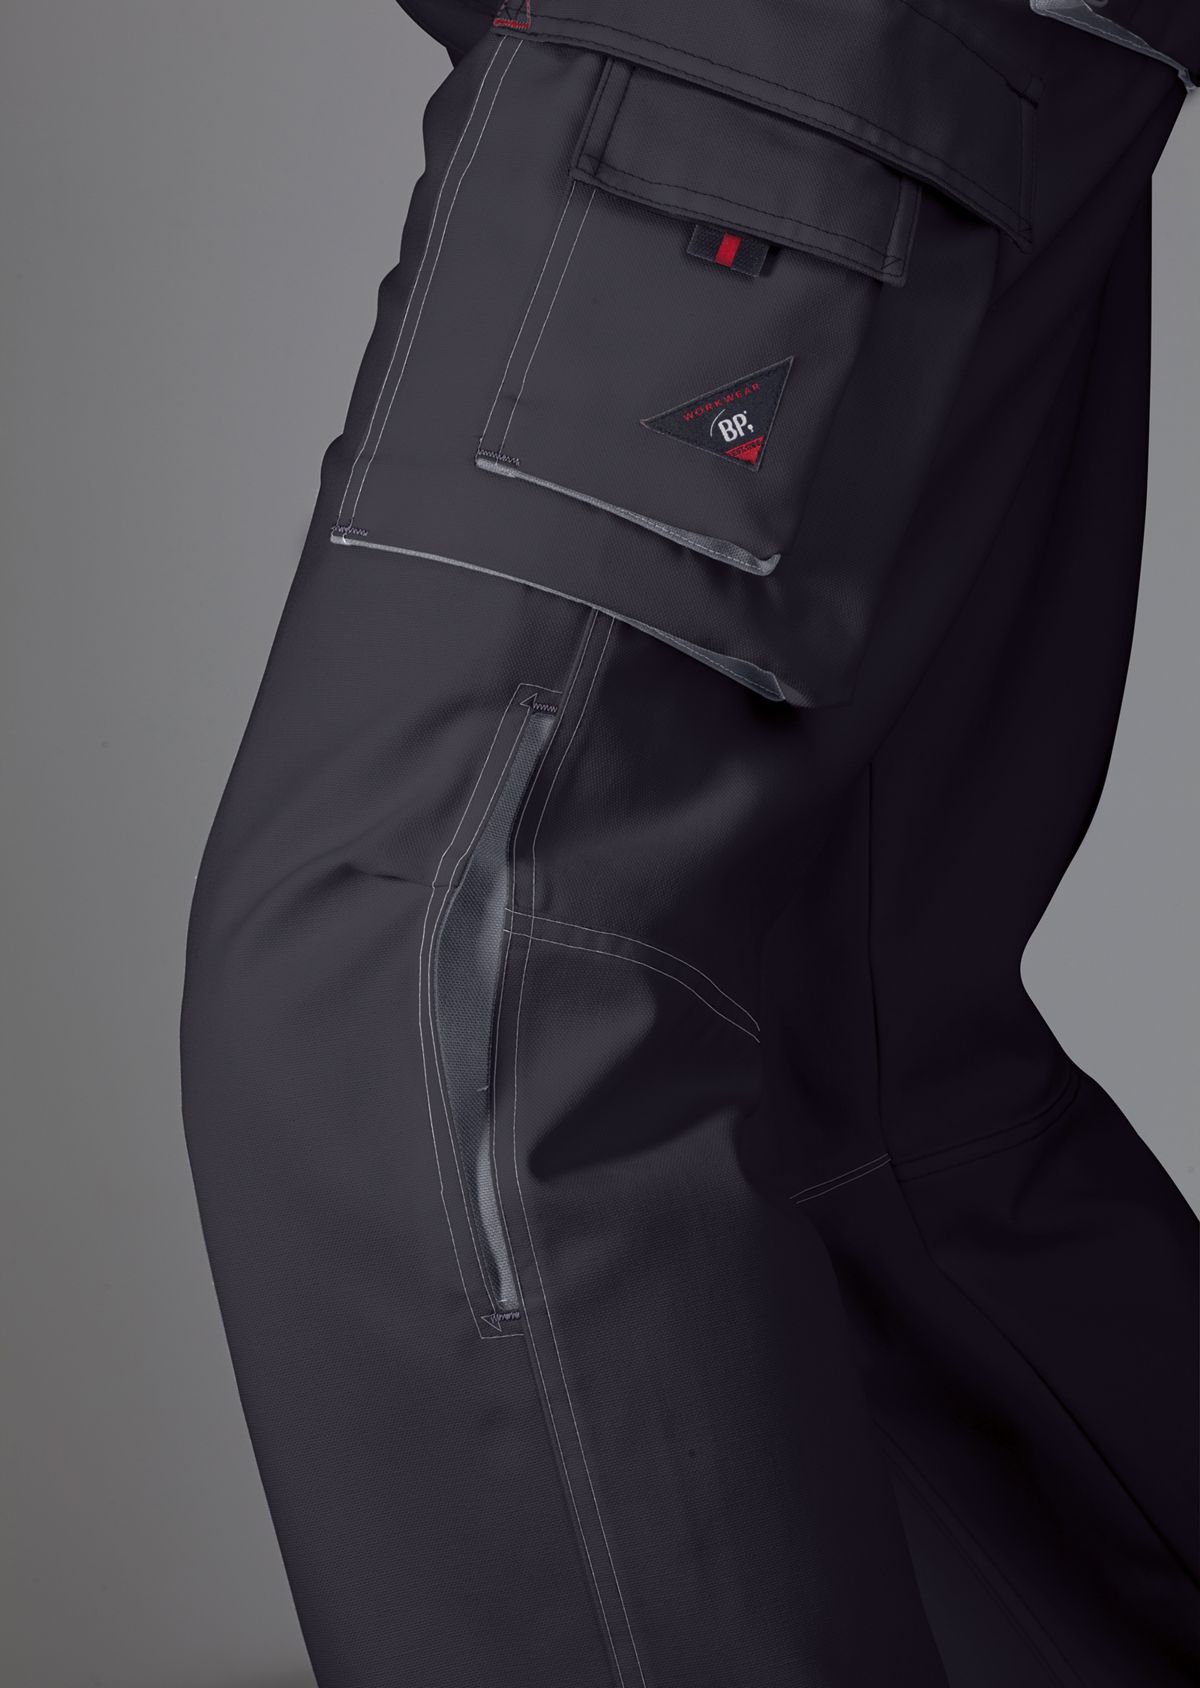 BP® Durable work trousers